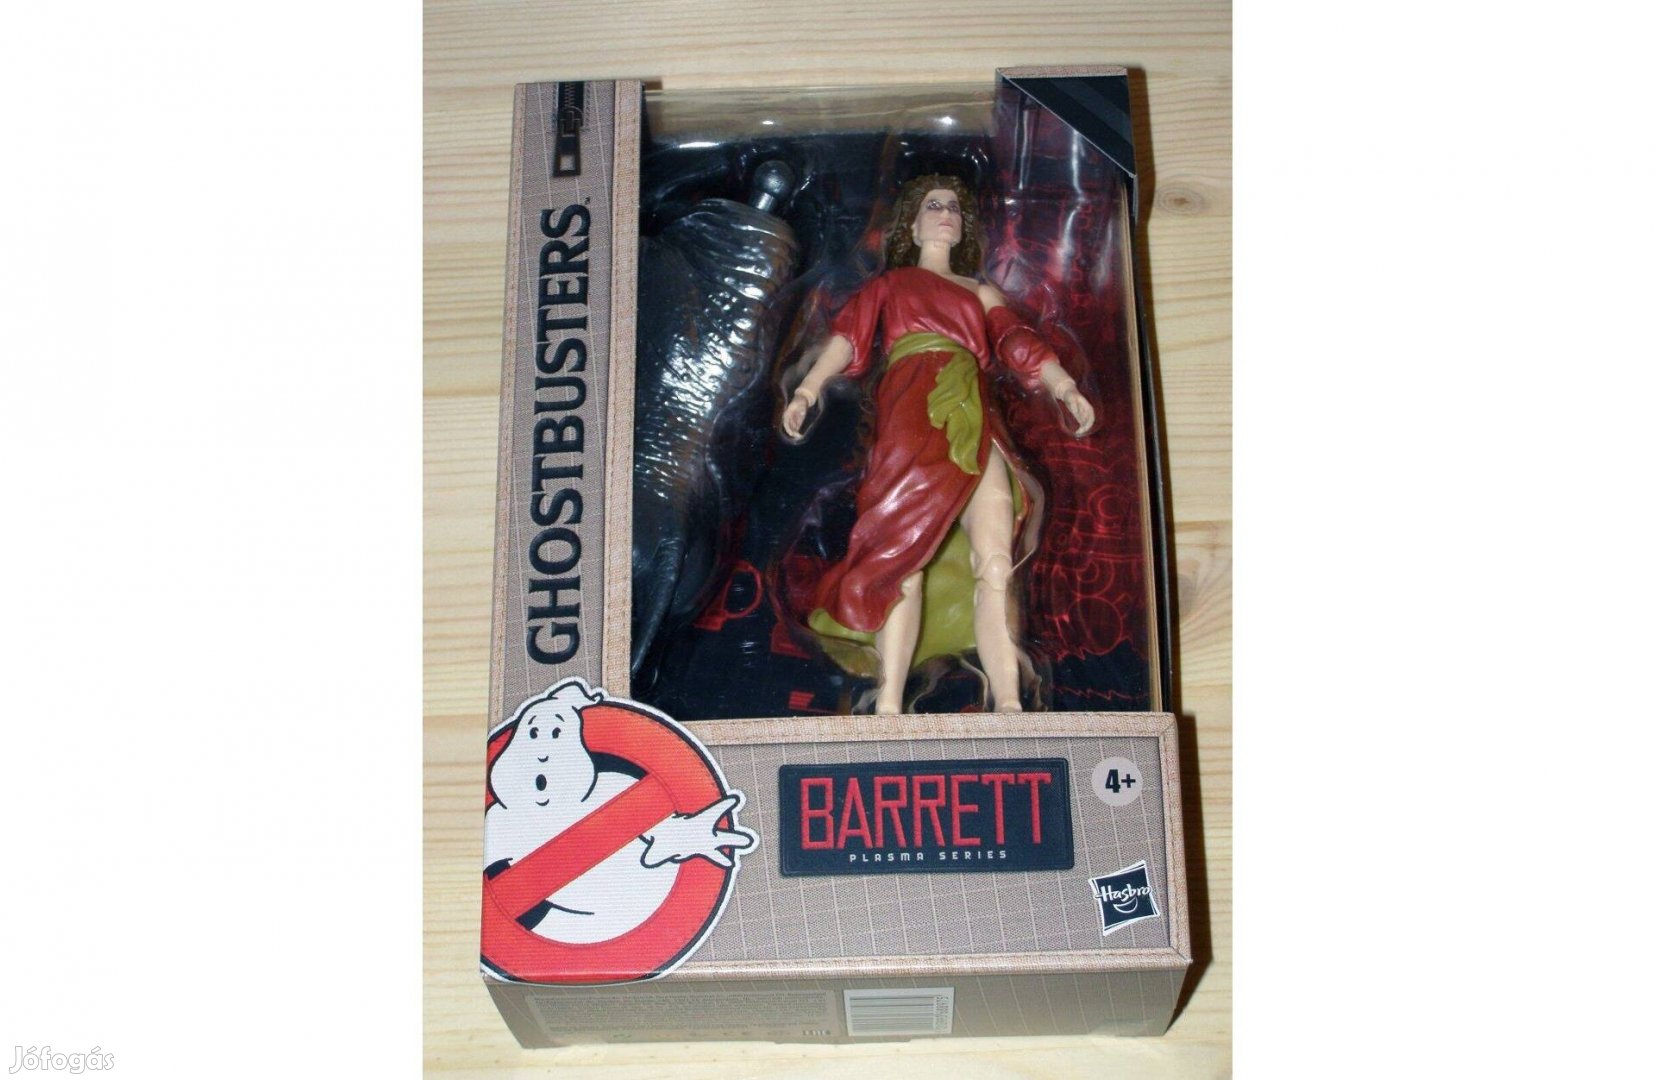 Ghostbusters Plasma Series 15 cm (6 inch) Dana Barrett figura